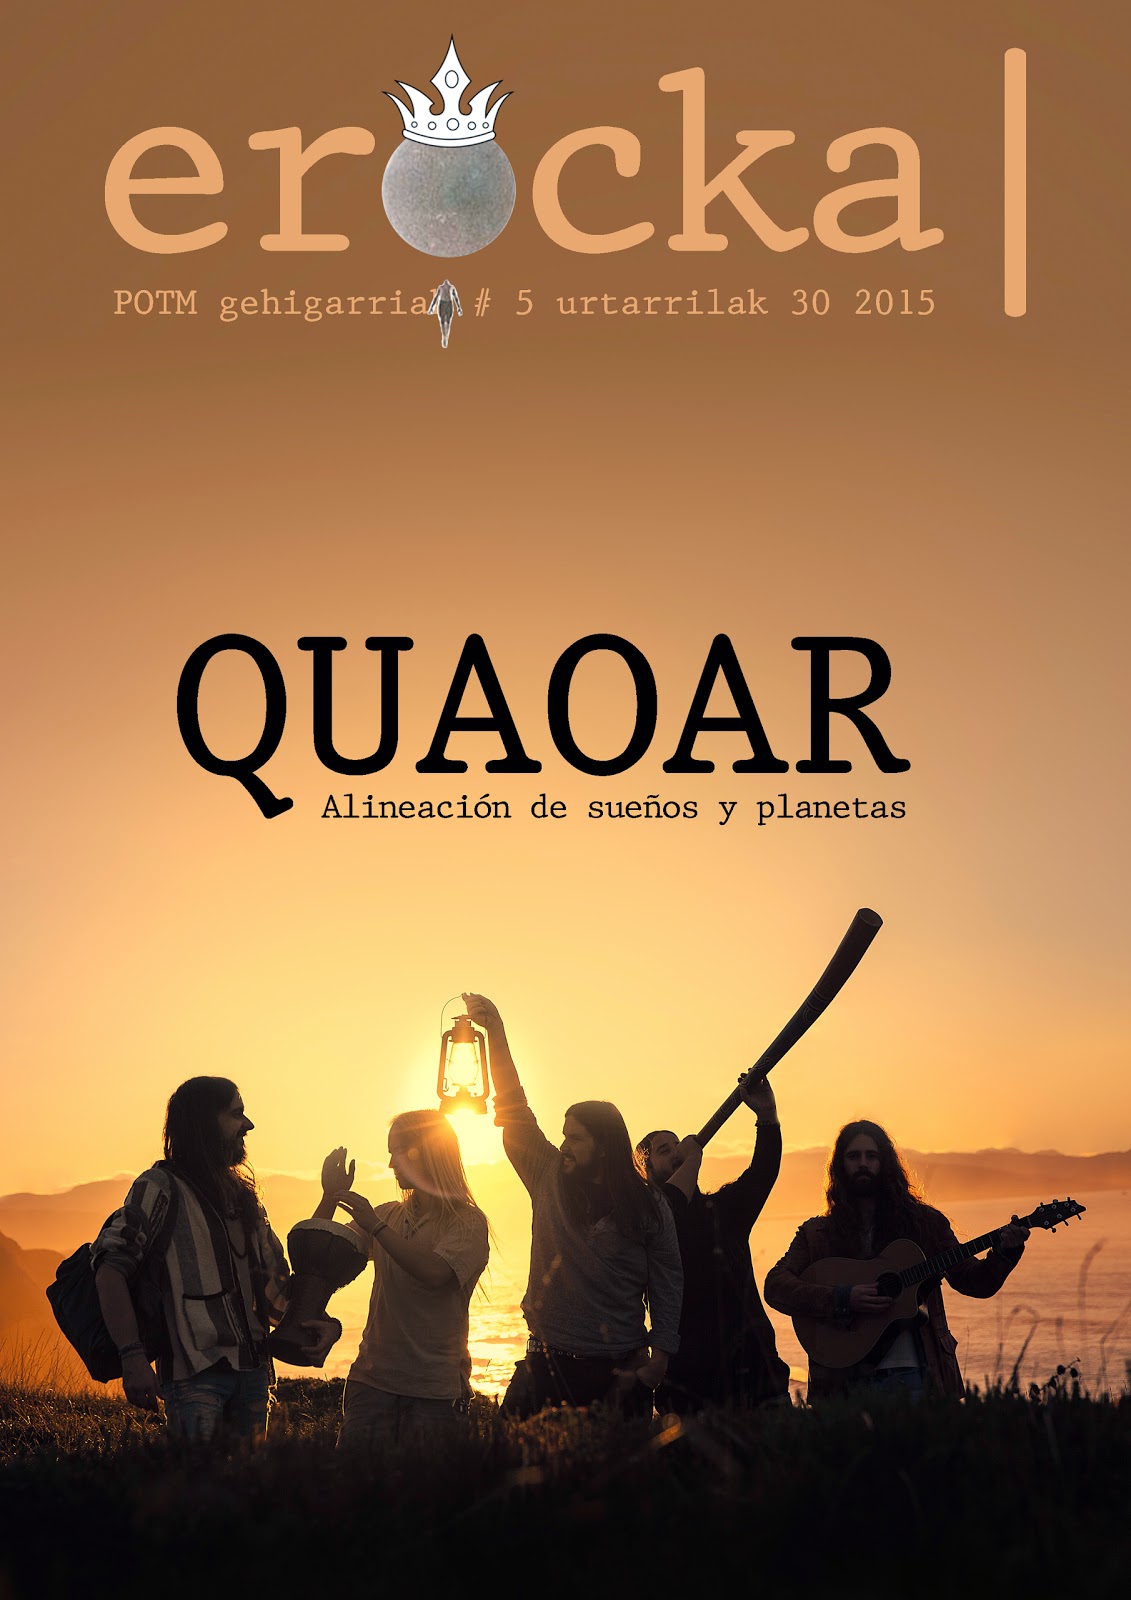 http://prideofthemonster.blogspot.com.es/2015/01/quaoar-alineacion-de-suenos-y-planetas.html